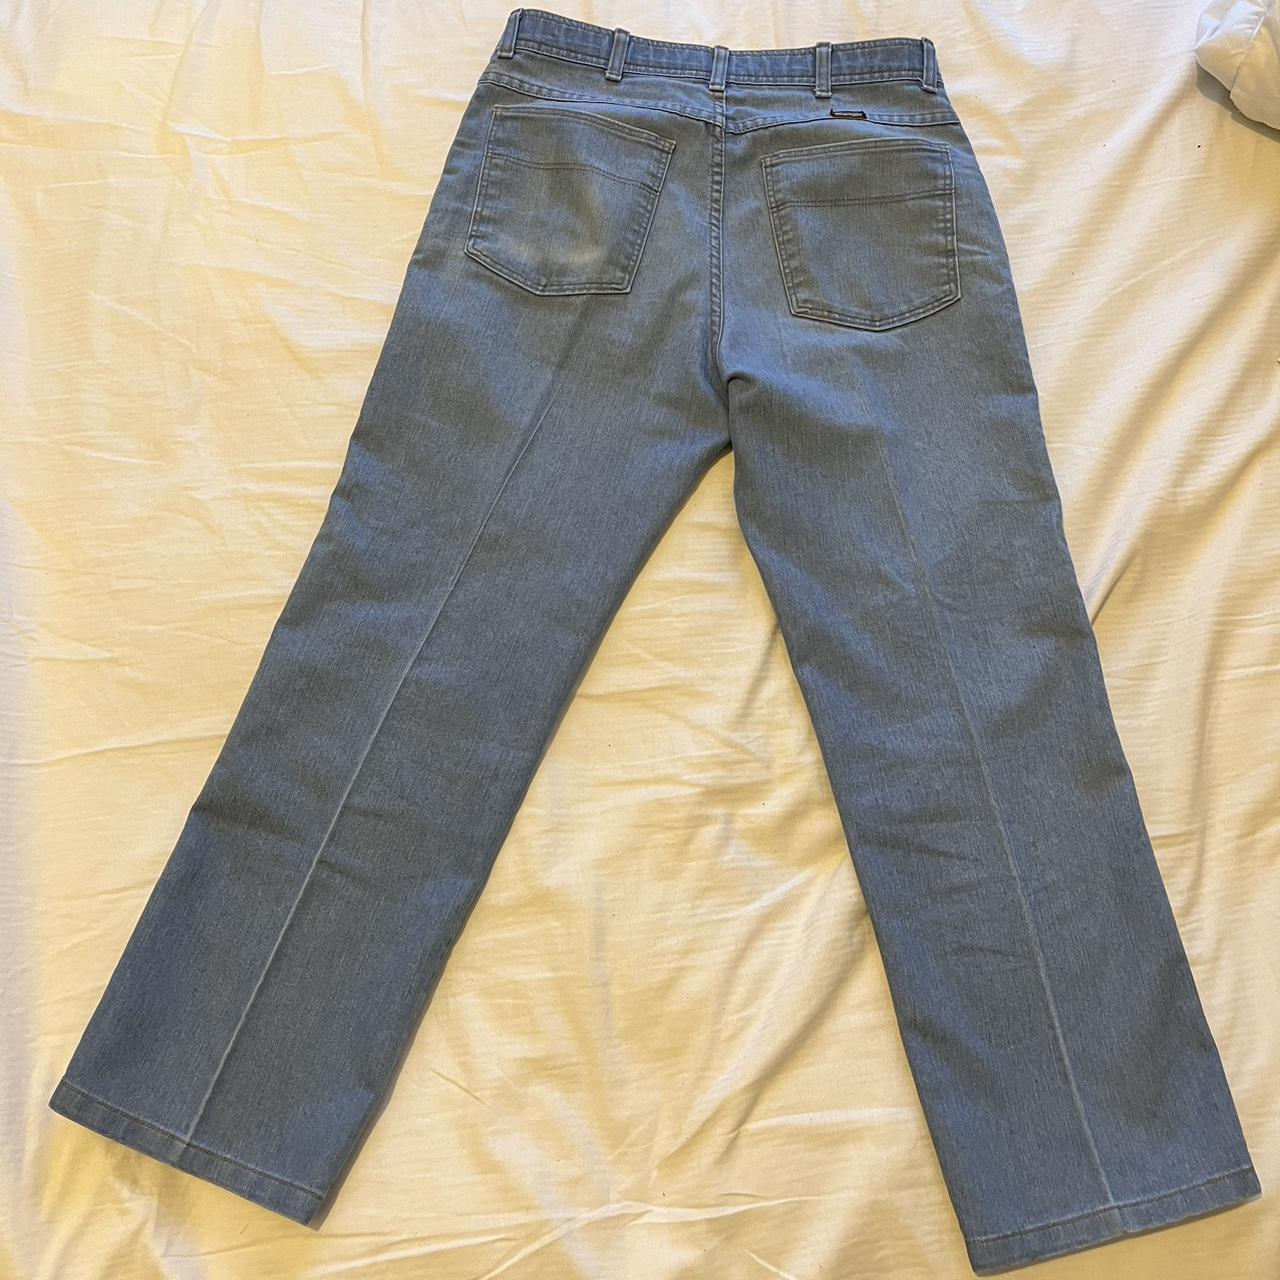 Wrangler jeans ⚰️ Size 34/30 in Mens. Baggy fit ... - Depop